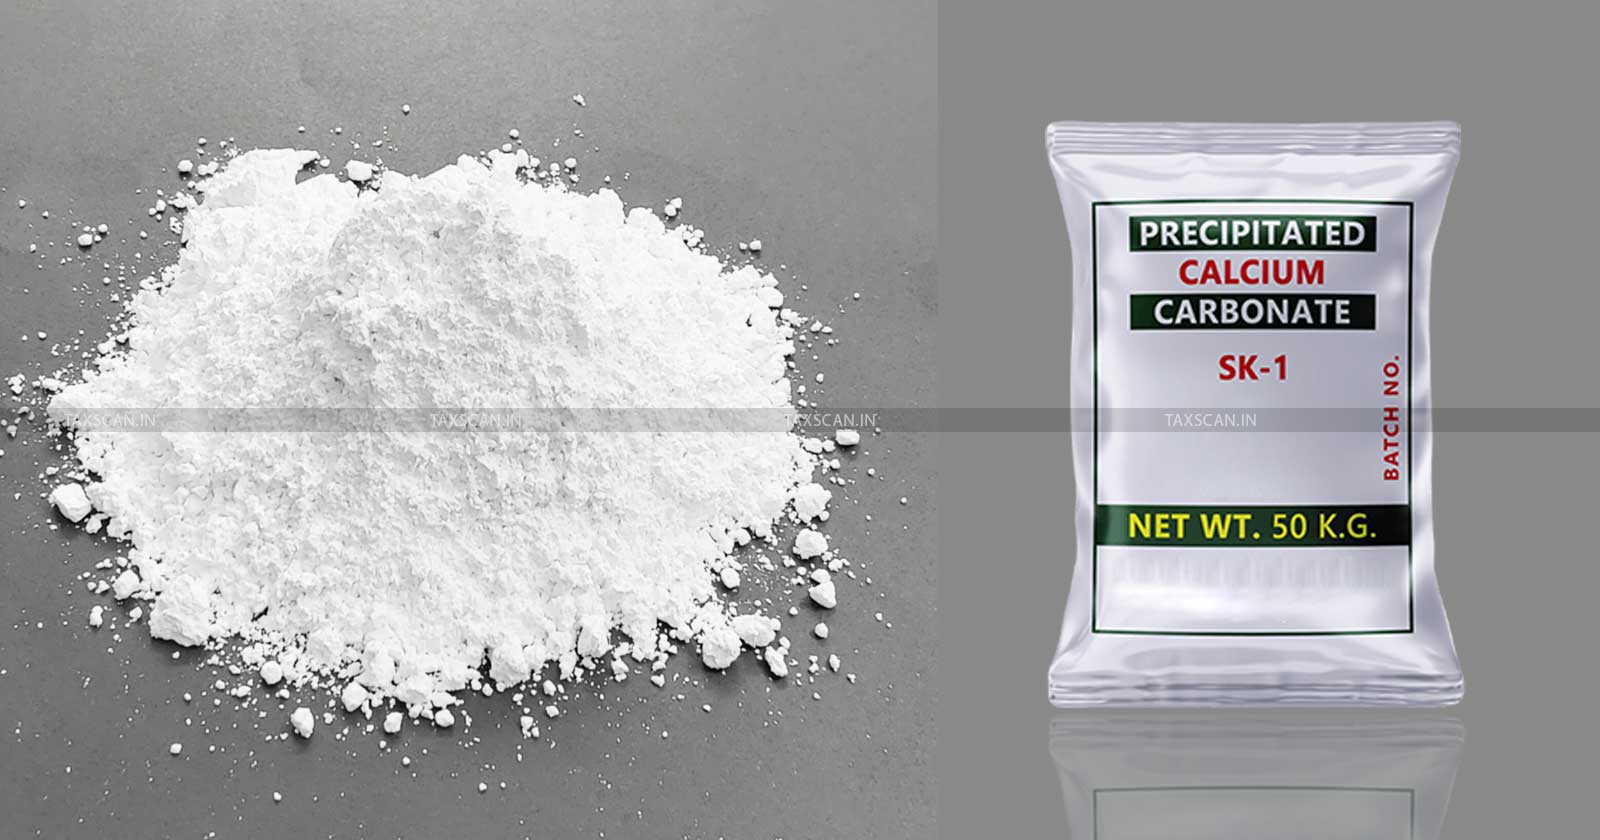 CESTAT - CESTAT Ahmedabad - Calcite powder taxation - Precipitated calcite carbonate - Customs - Excise - Service Tax - taxscan